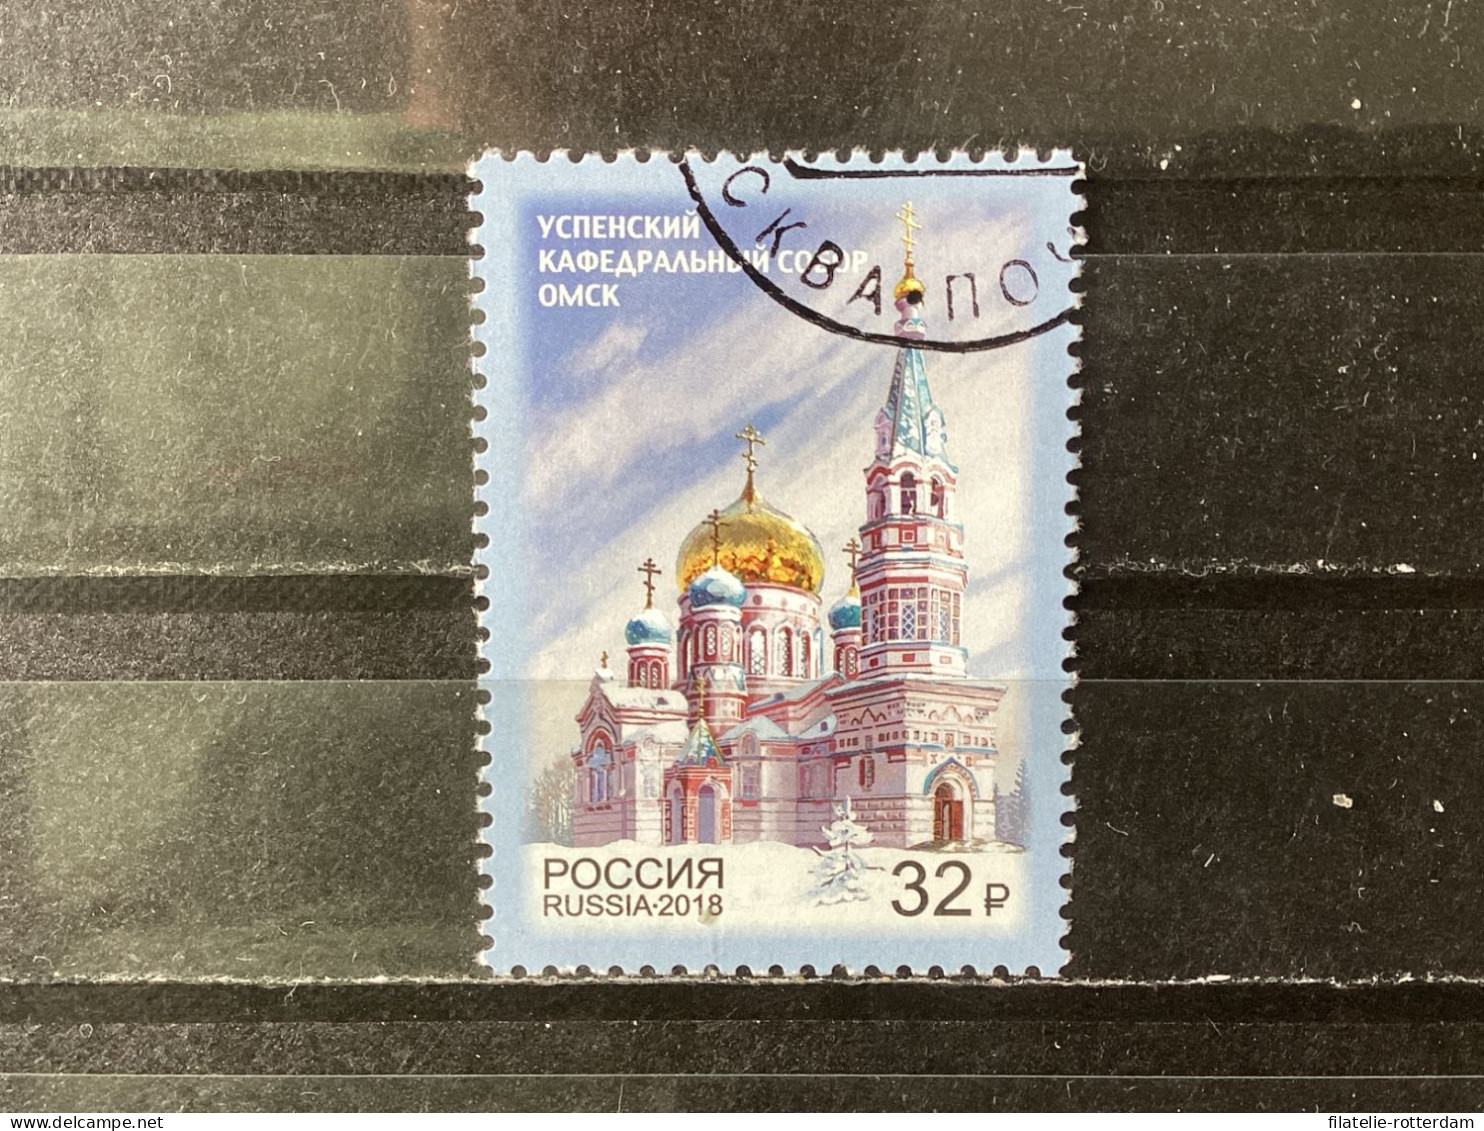 Russia / Rusland - Assumption Cathedral, Omsk (32) 2018 - Usados